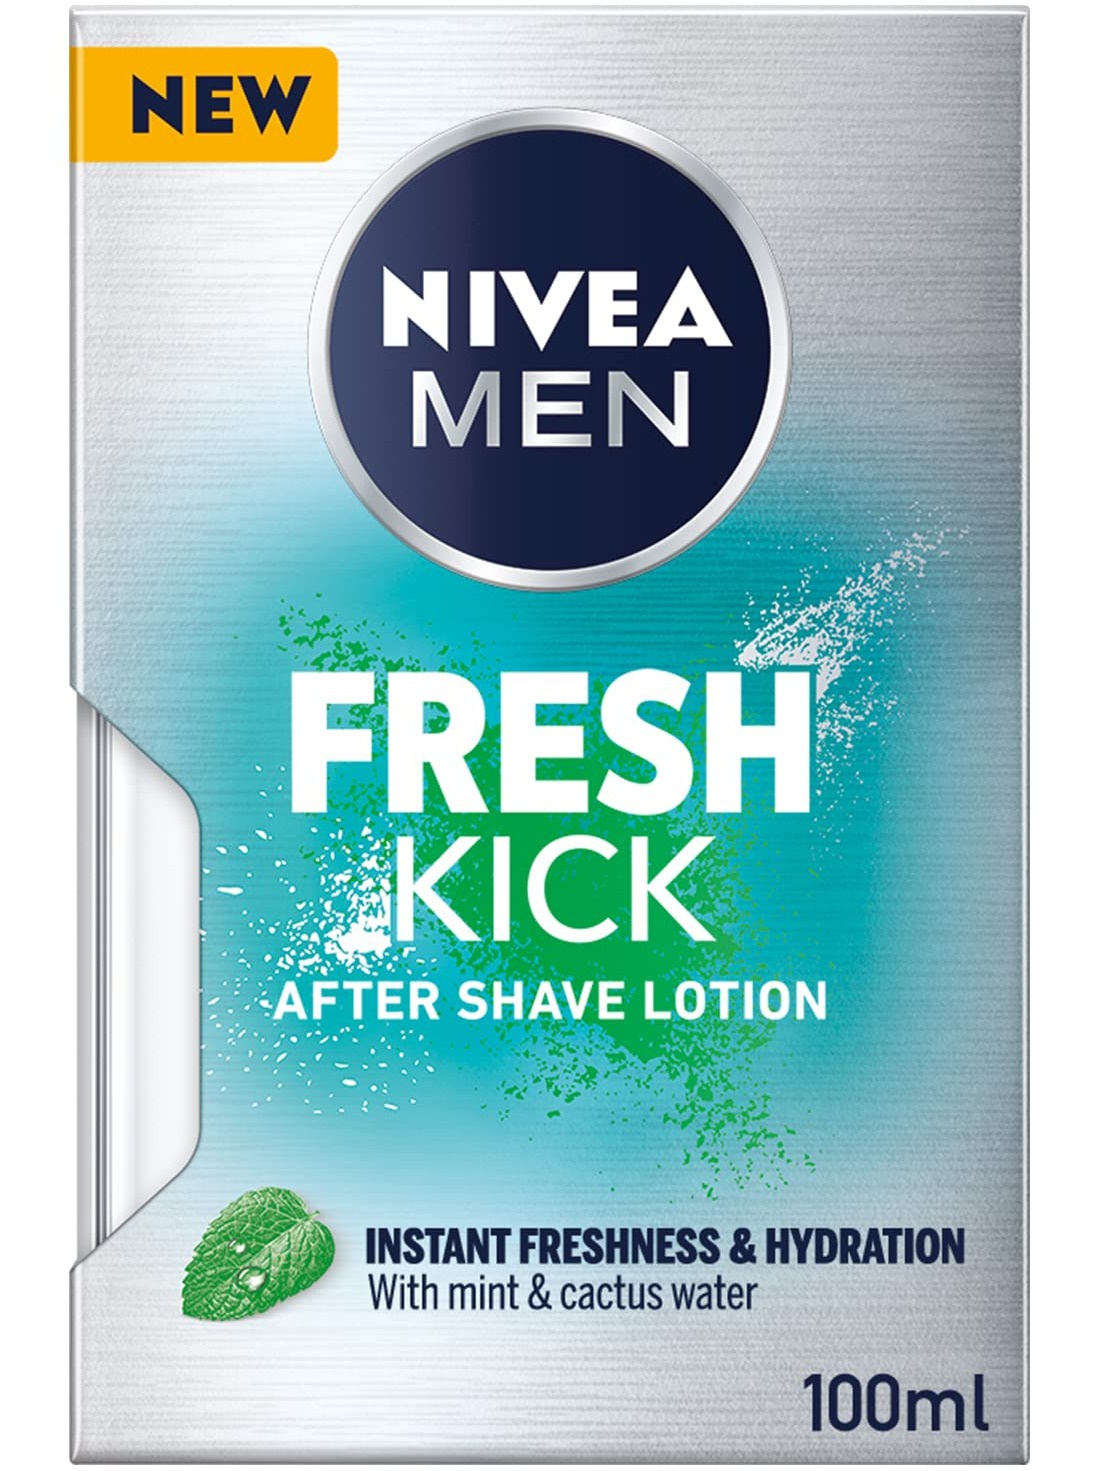 NIVEA MEN Fresh Kick After Shave Lotion